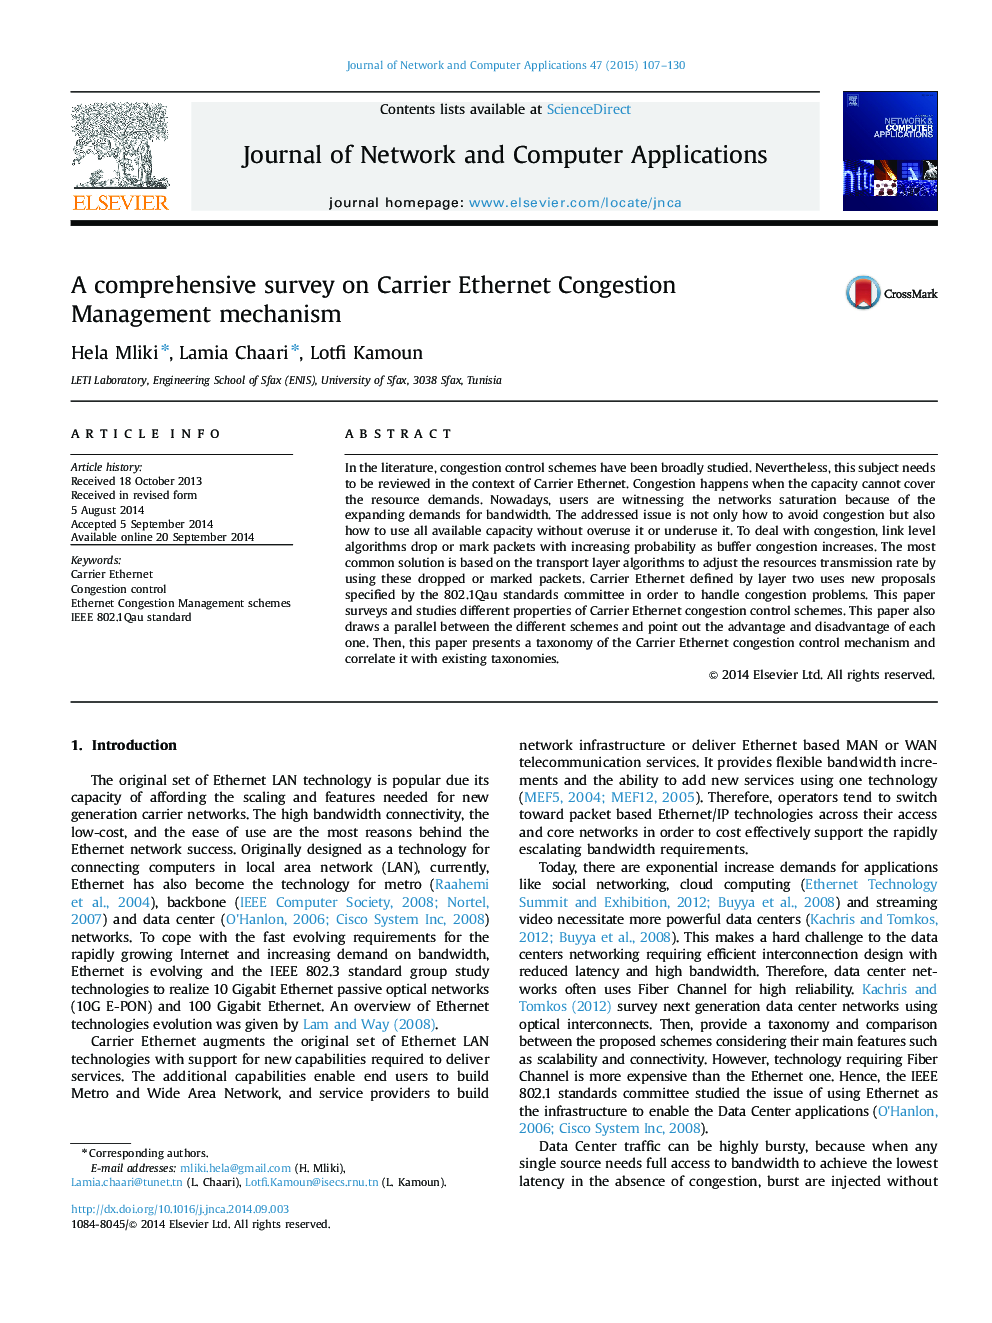 A comprehensive survey on Carrier Ethernet Congestion Management mechanism